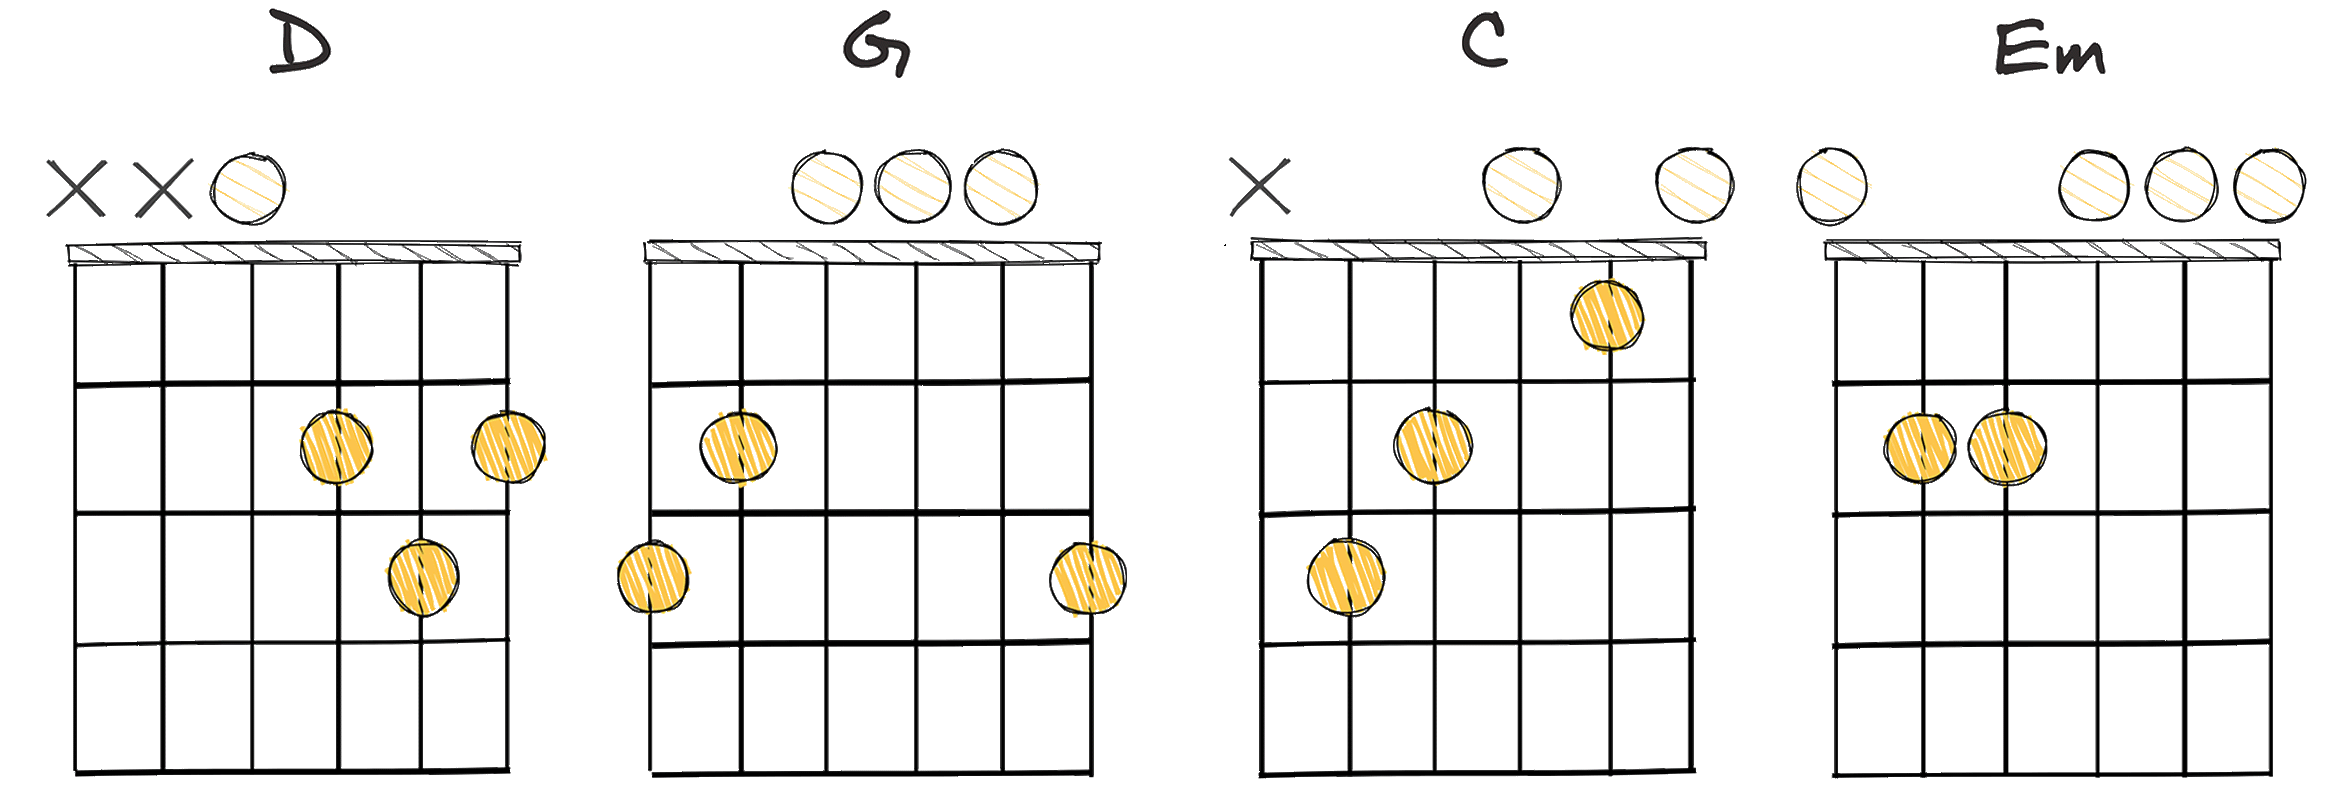 V-I-IV-vi (5-1-4-6) chords diagram